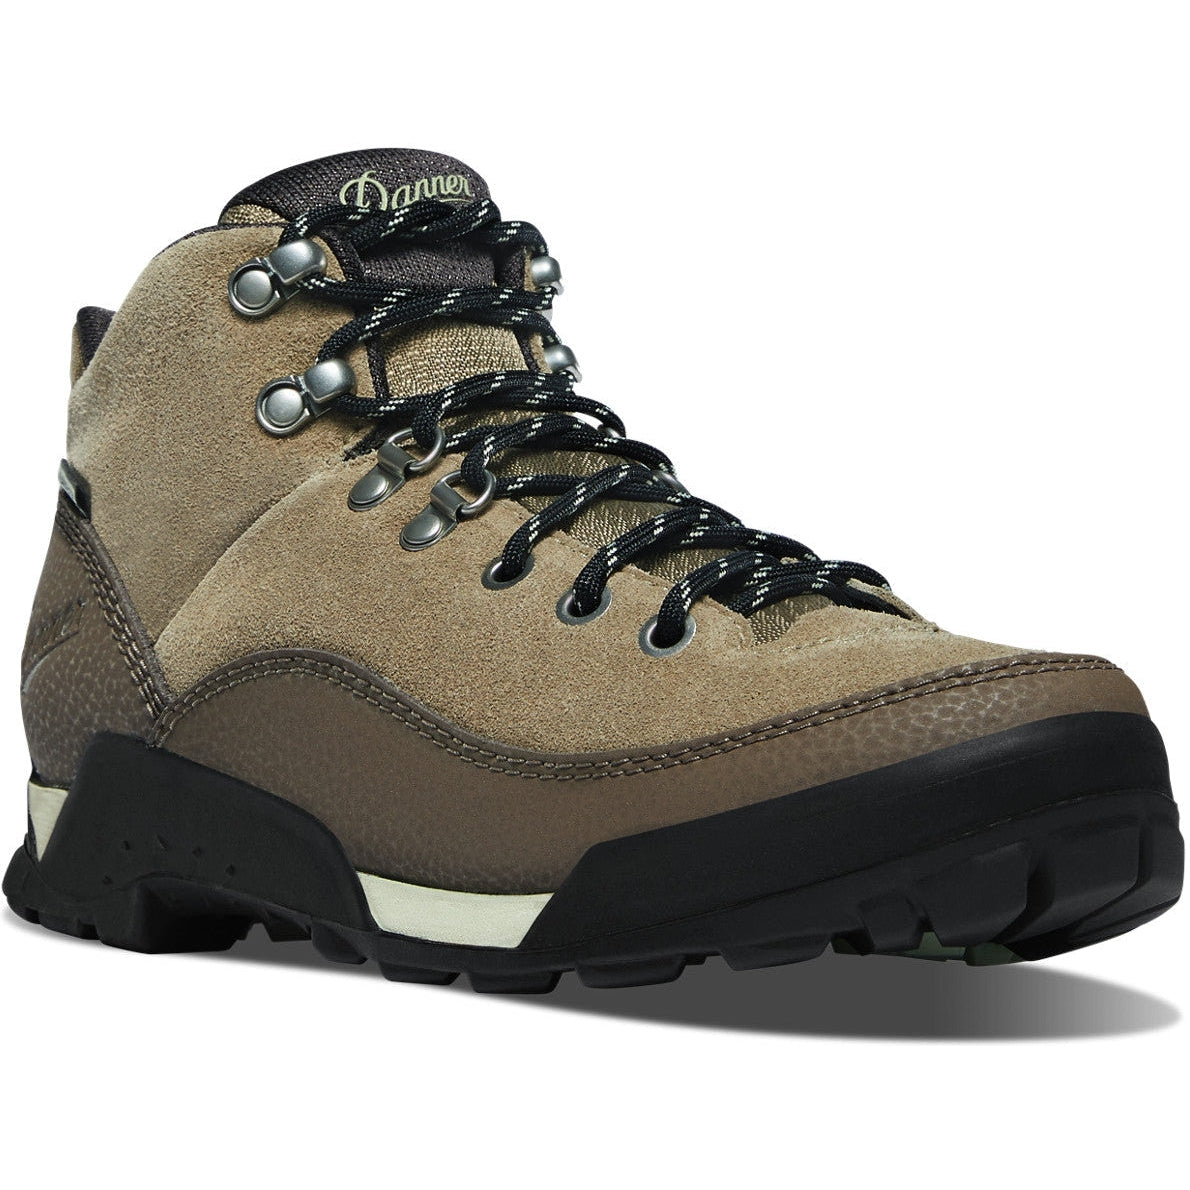 Danner Women's Panorama Mid 6" Waterproof Hiking Boot - Gray - 63437 7 / Medium / Gray - Overlook Boots